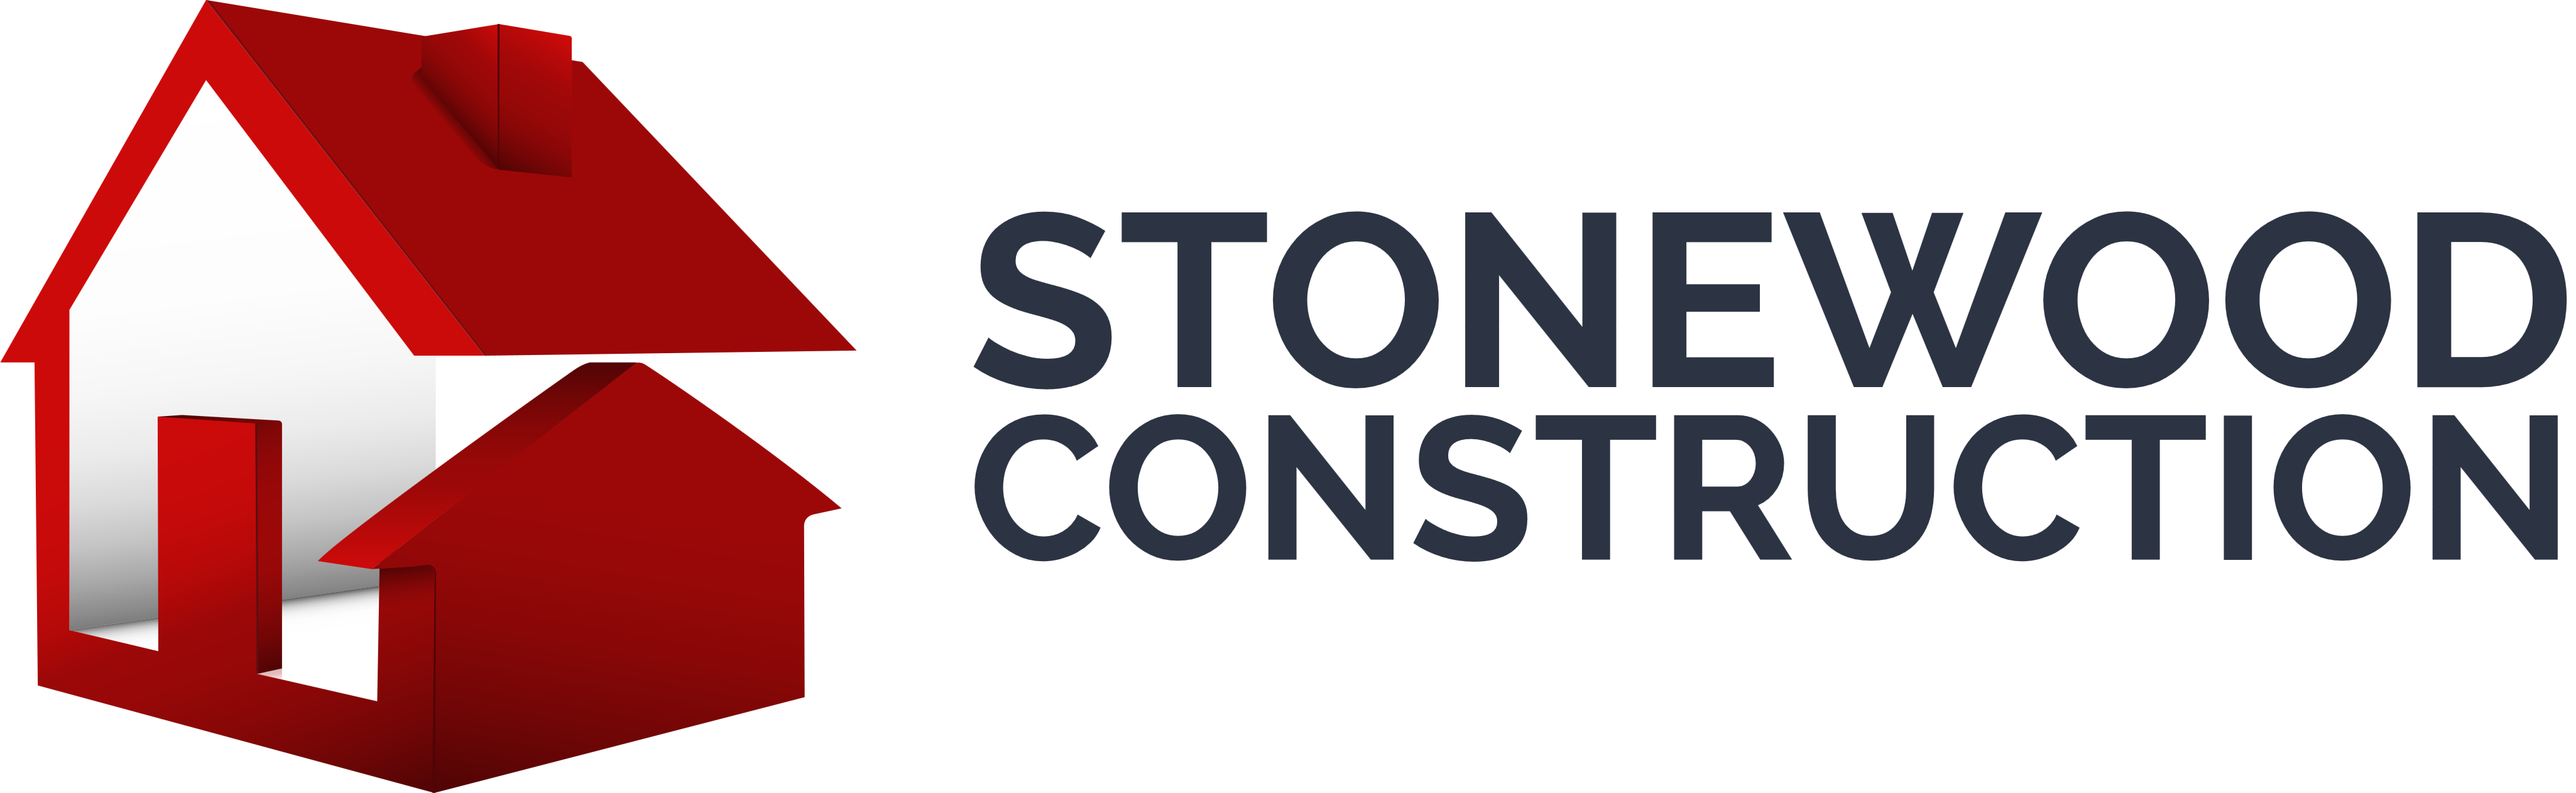 Stonewood Construction – Logos Download